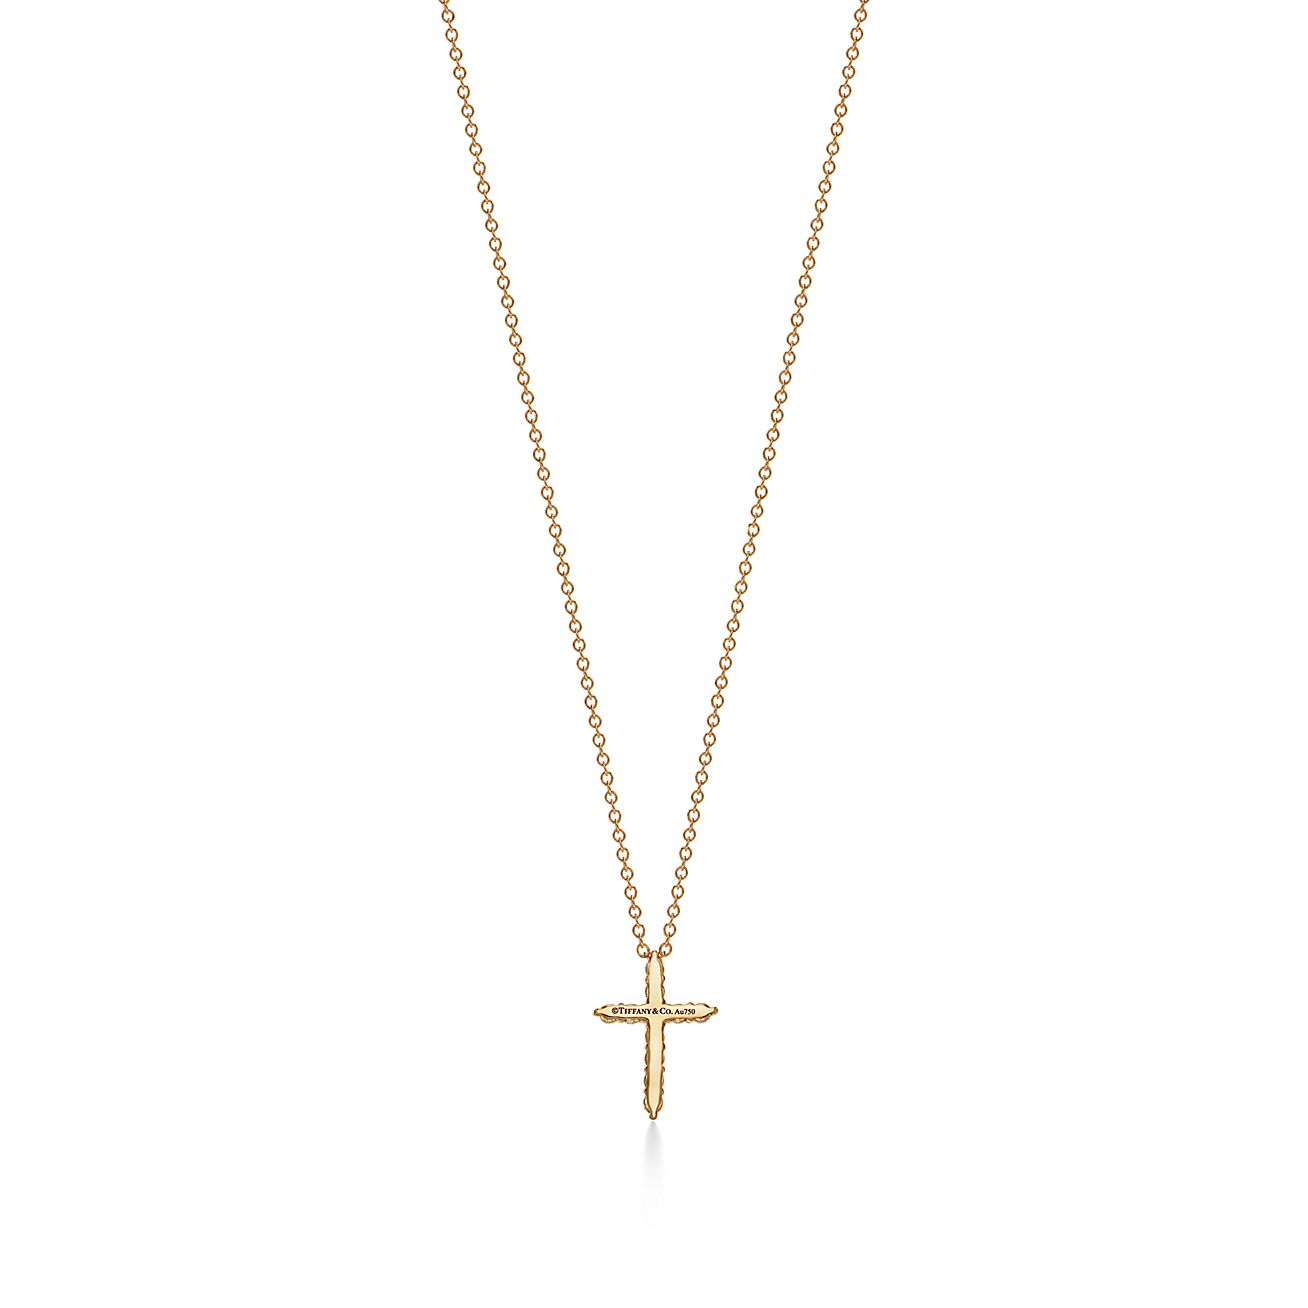 tiffany necklace cross pendant